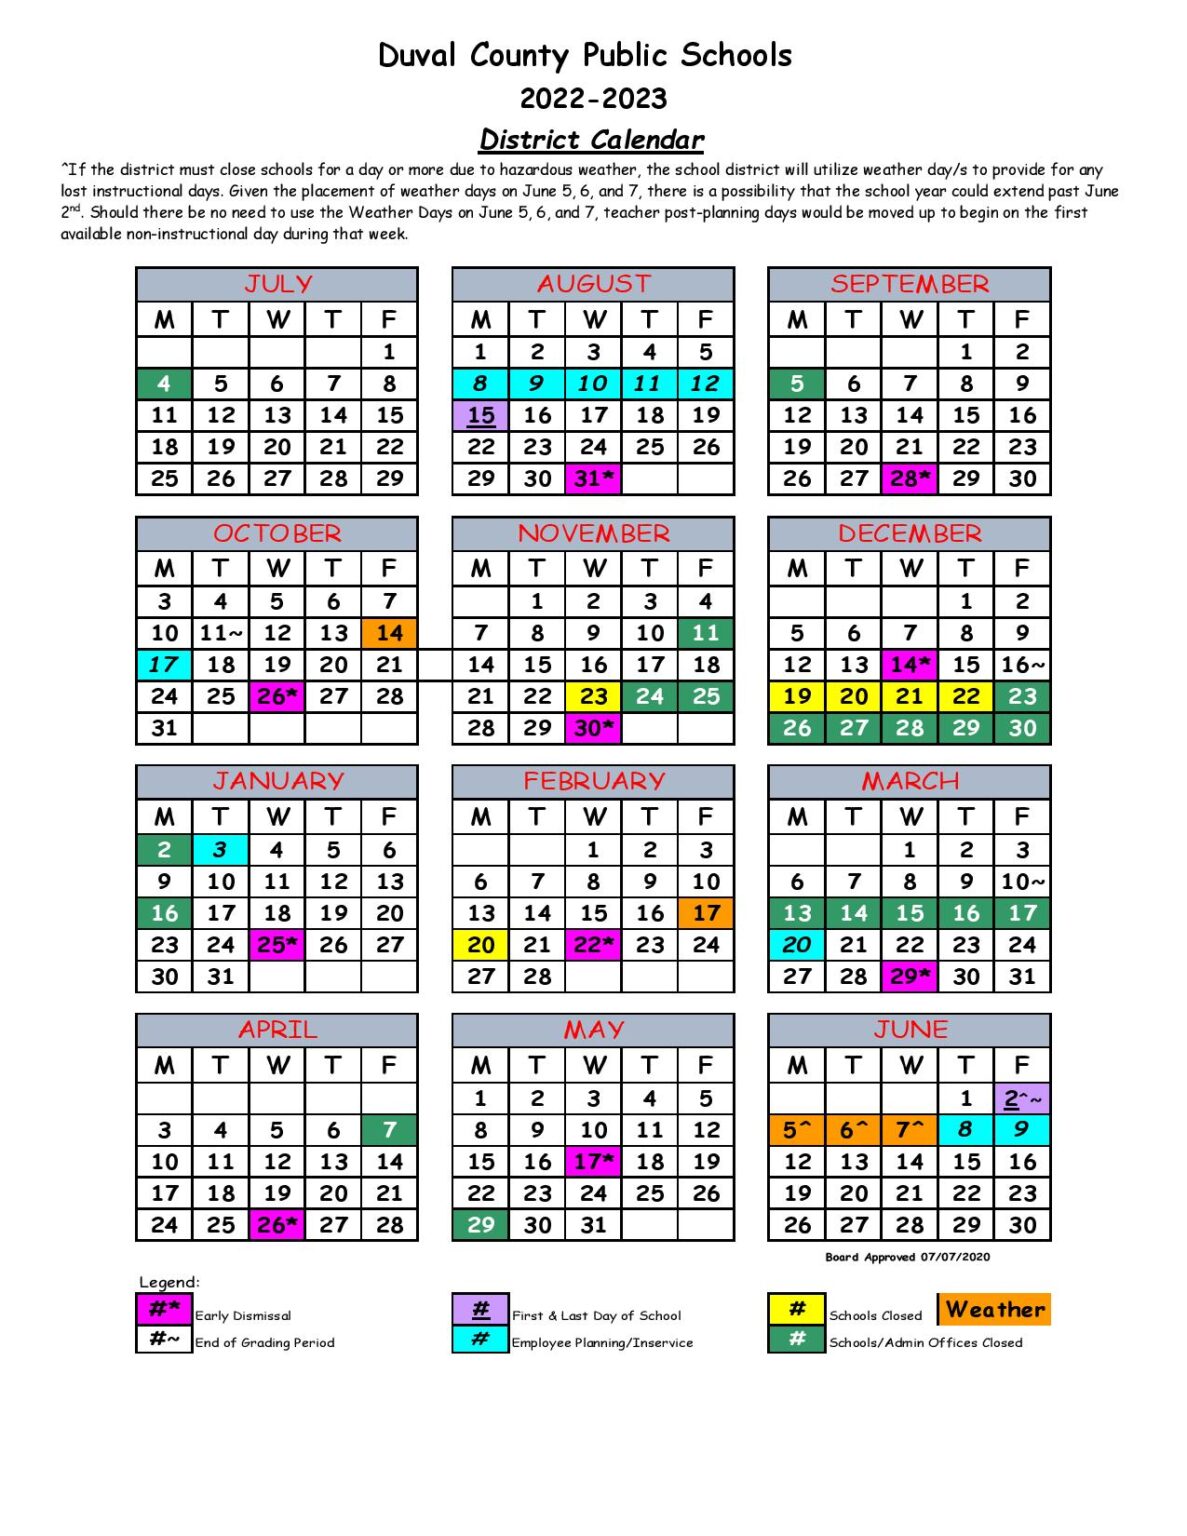 Duval County Public Schools Calendar 2022-2023 in PDF